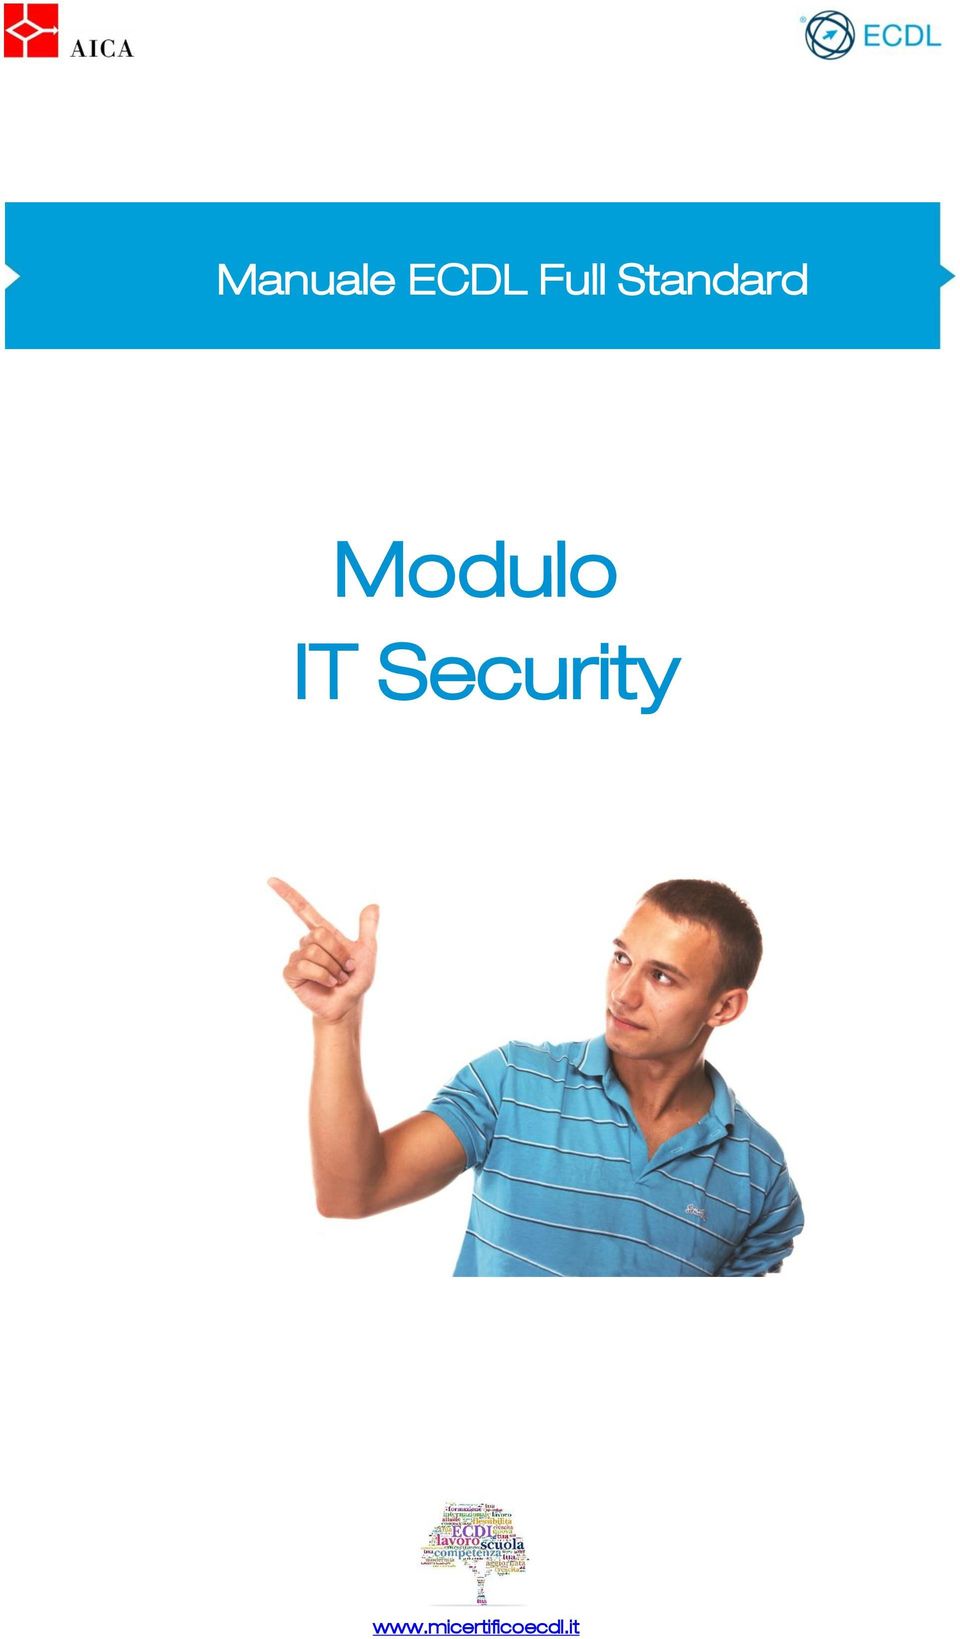 Mdul IT Security